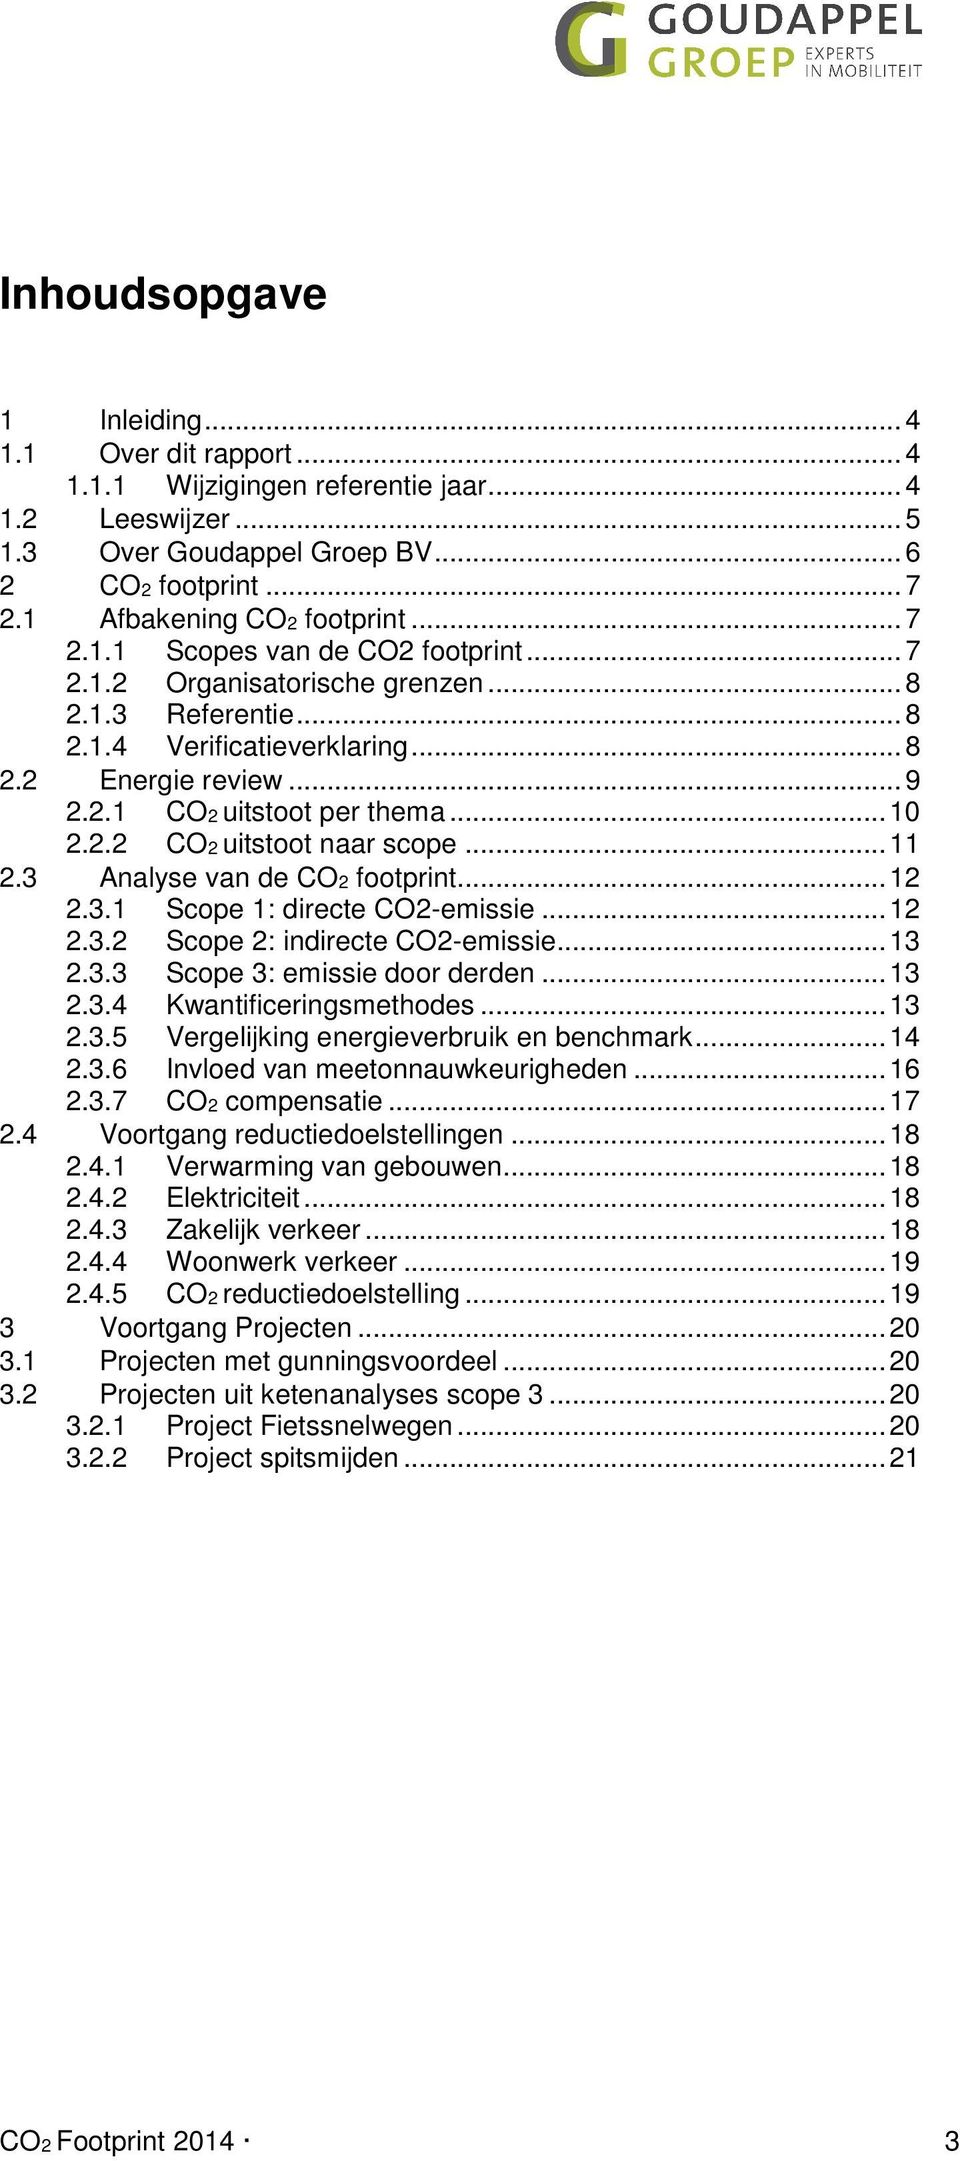 .. 11 2.3 Analyse van de CO2 footprint... 12 2.3.1 Scope 1: directe CO2-emissie... 12 2.3.2 Scope 2: indirecte CO2-emissie... 13 2.3.3 Scope 3: emissie door derden... 13 2.3.4 Kwantificeringsmethodes.